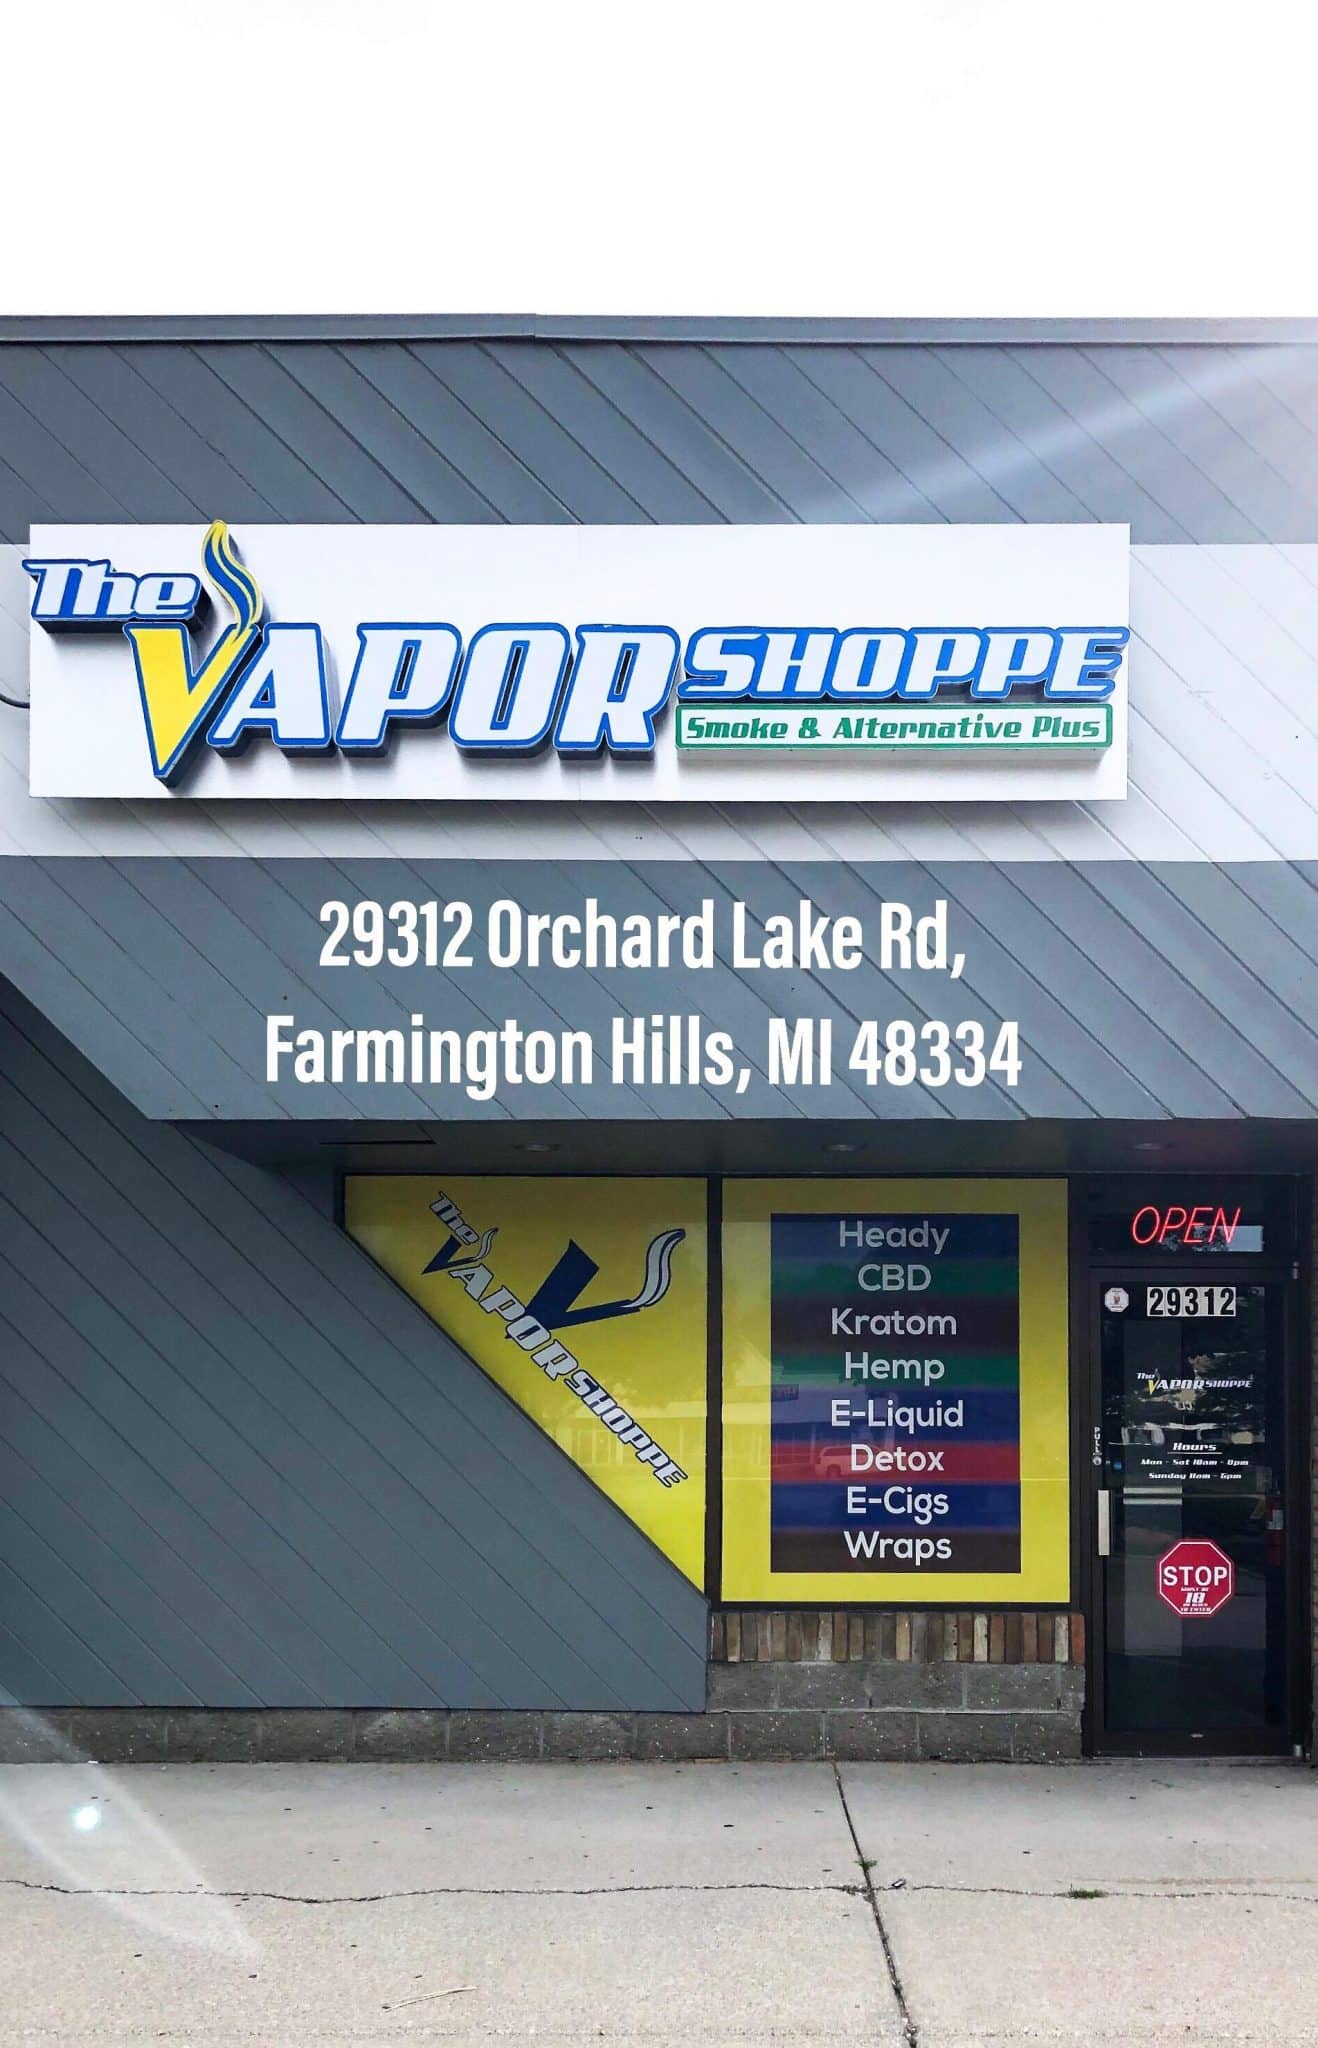 The Vapor Shoppe Smoke & Alternative Plus, 29312 Orchard Lake Rd, Farmington Hills, MI 48334, United States